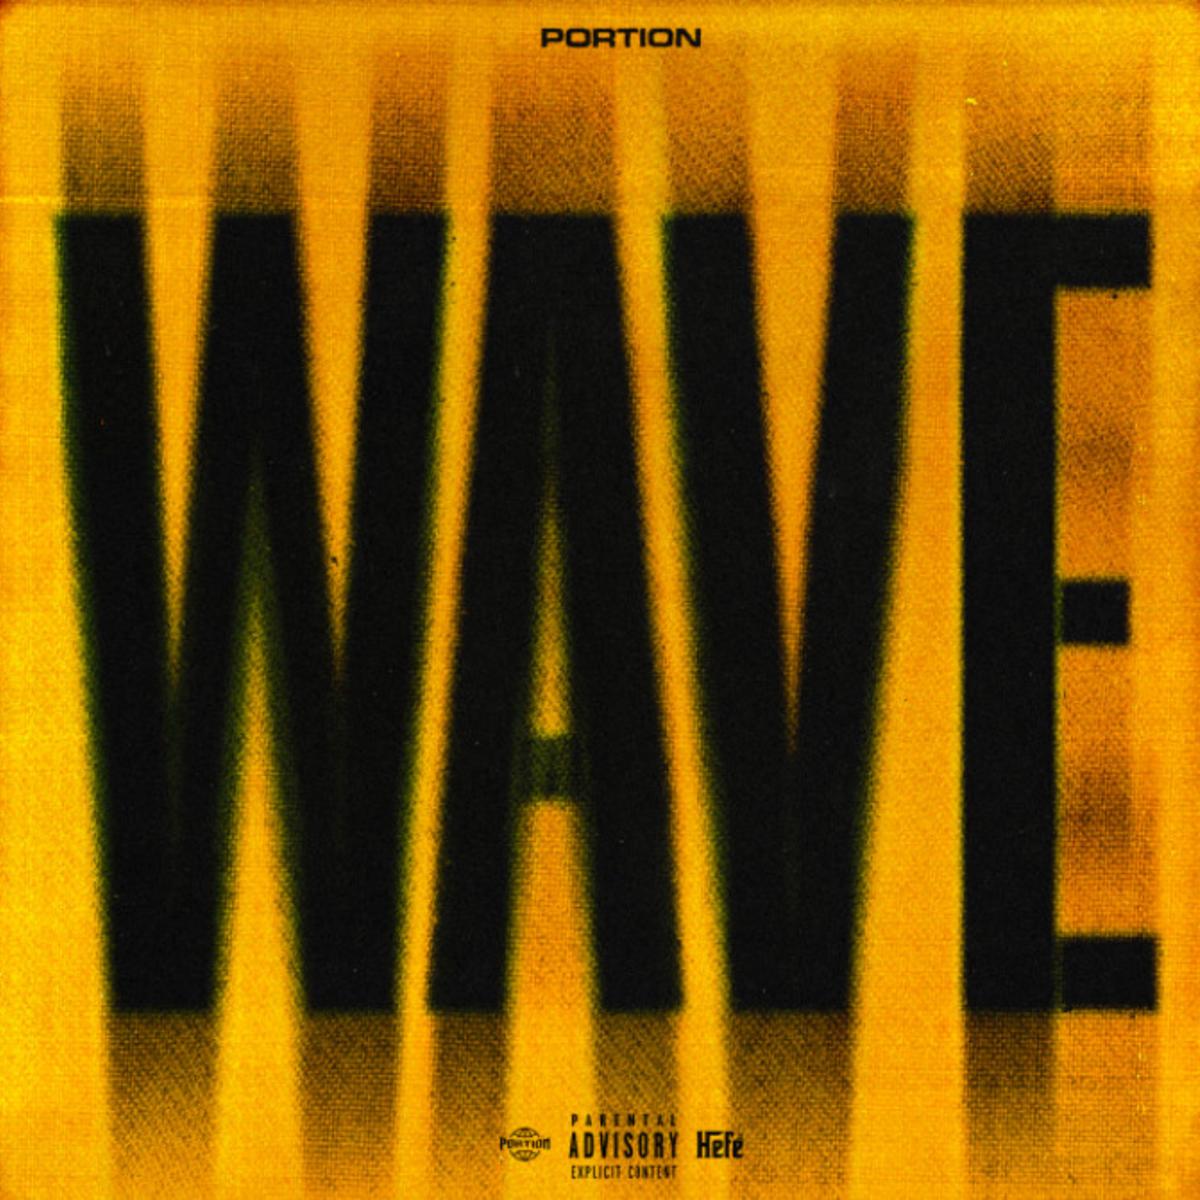 Portion - Wave mp3